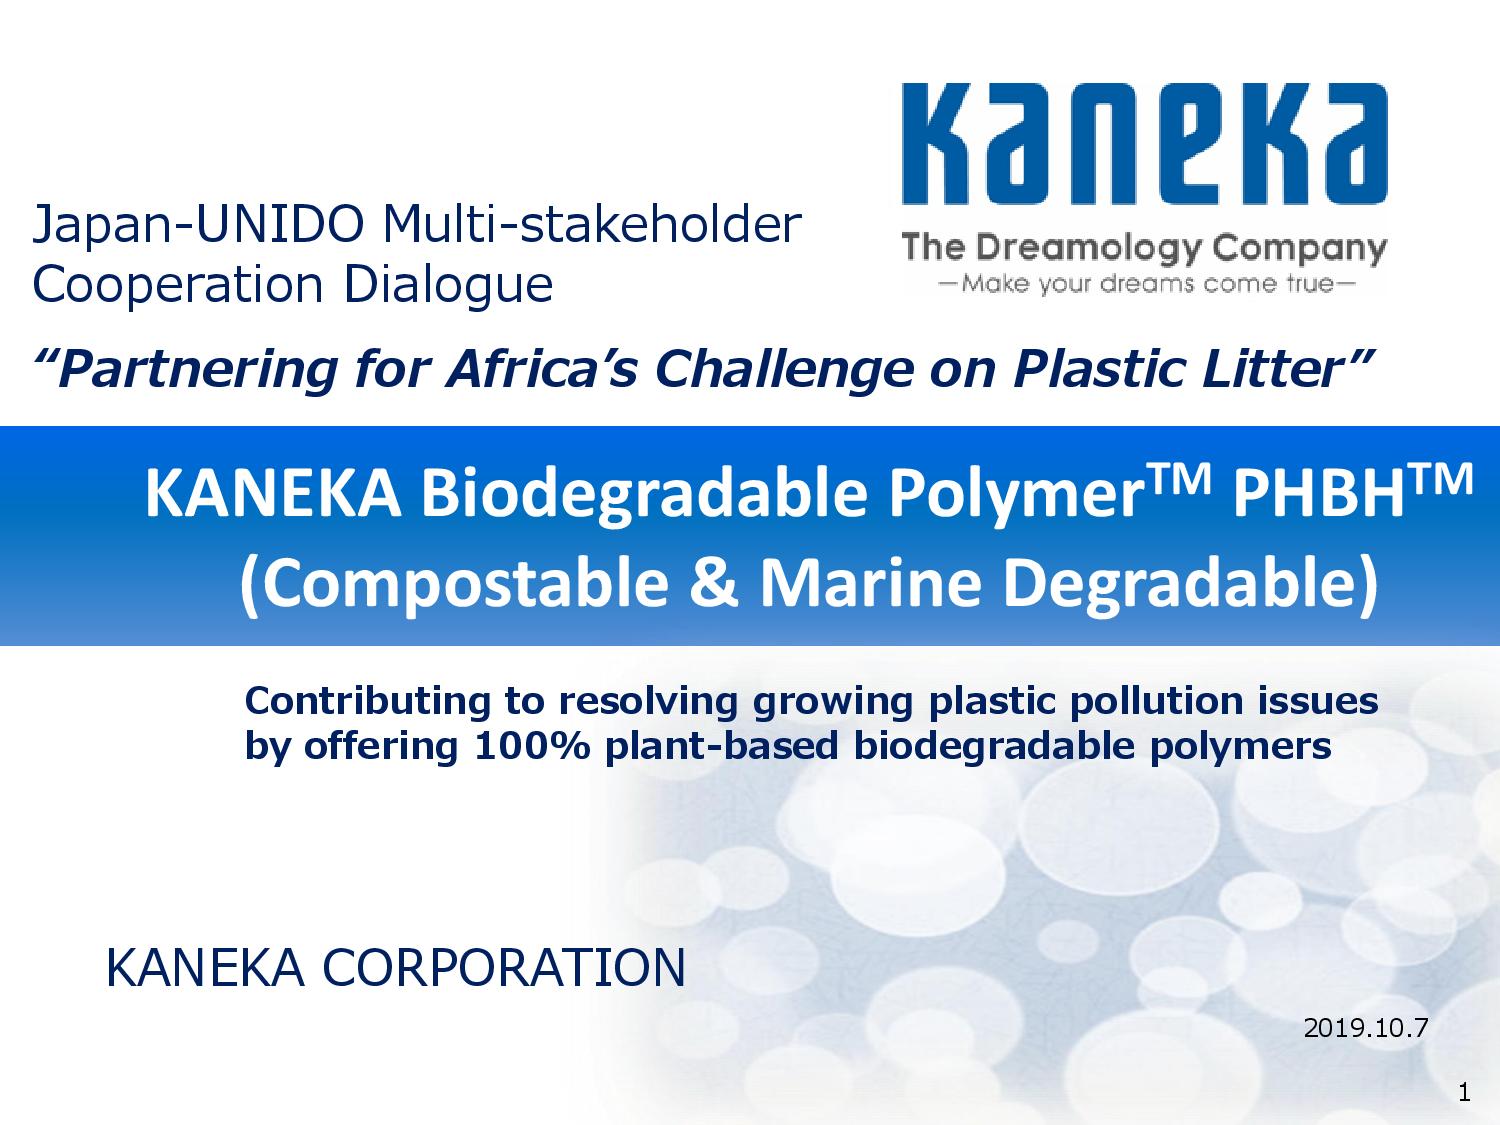 KANEKA Biodegradable Polymer “Partnering for Africa’s Challenge on Plastic Litter”: Expert Group Meeting 2019